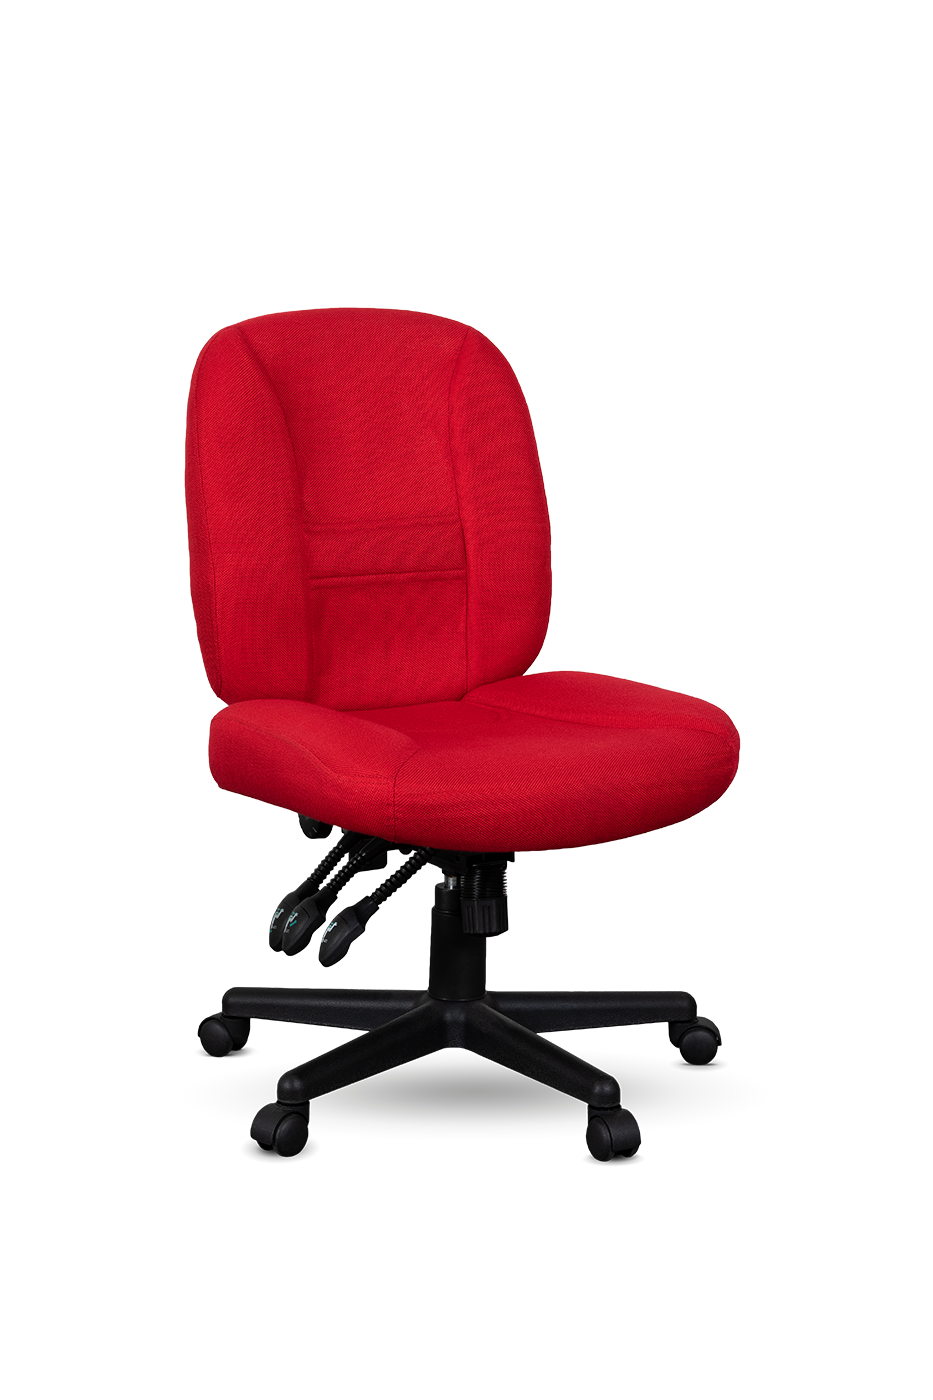 BERNINA Red Chair